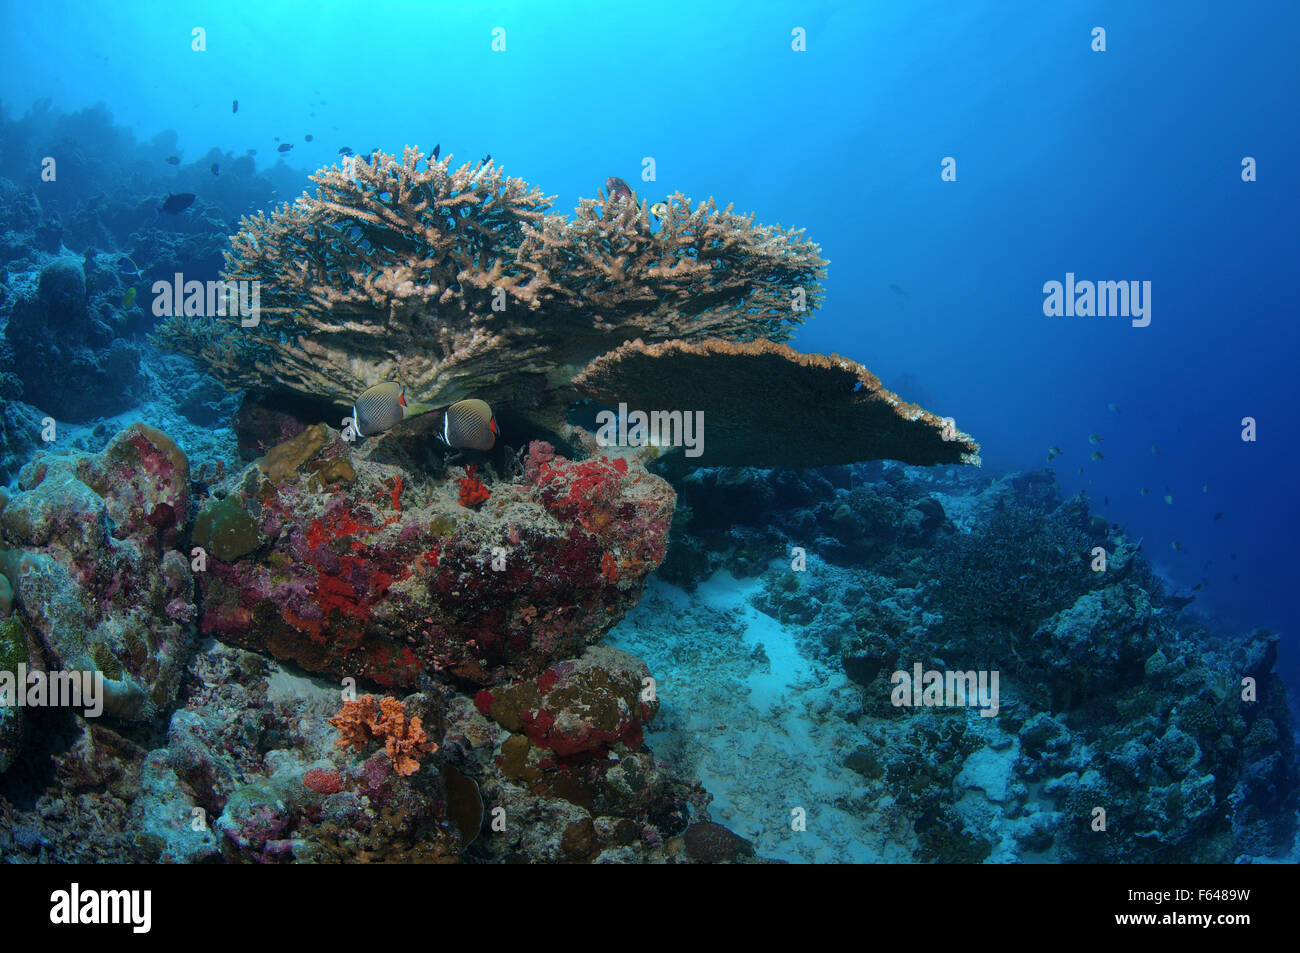 Coral reef, Oceano Indiano, Maldive Foto Stock